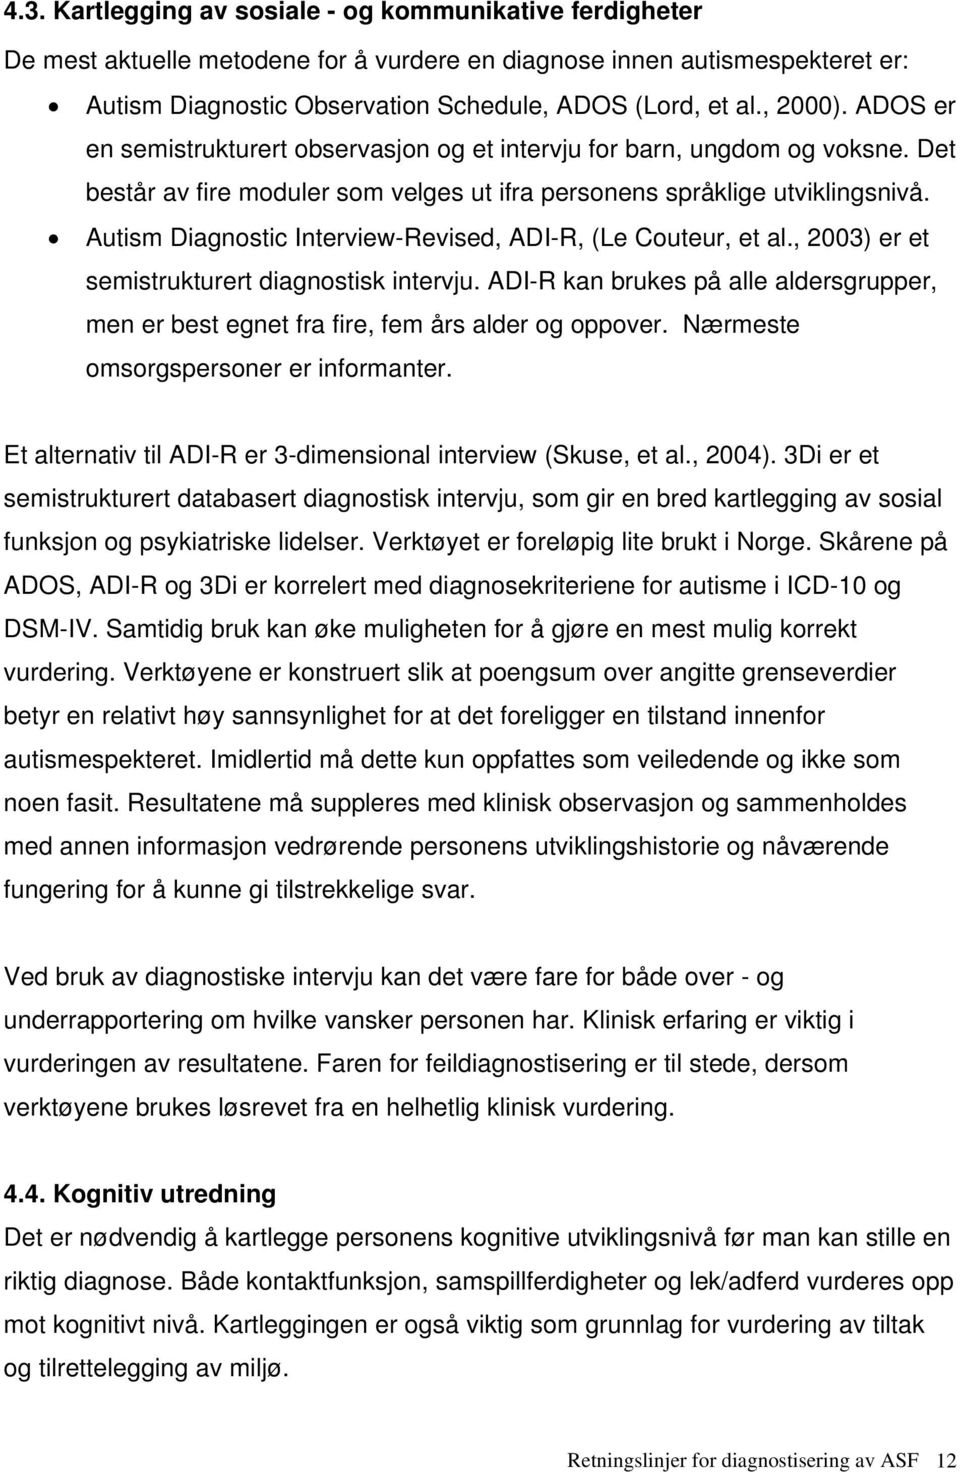 Autism Diagnostic Interview-Revised, ADI-R, (Le Couteur, et al., 2003) er et semistrukturert diagnostisk intervju.